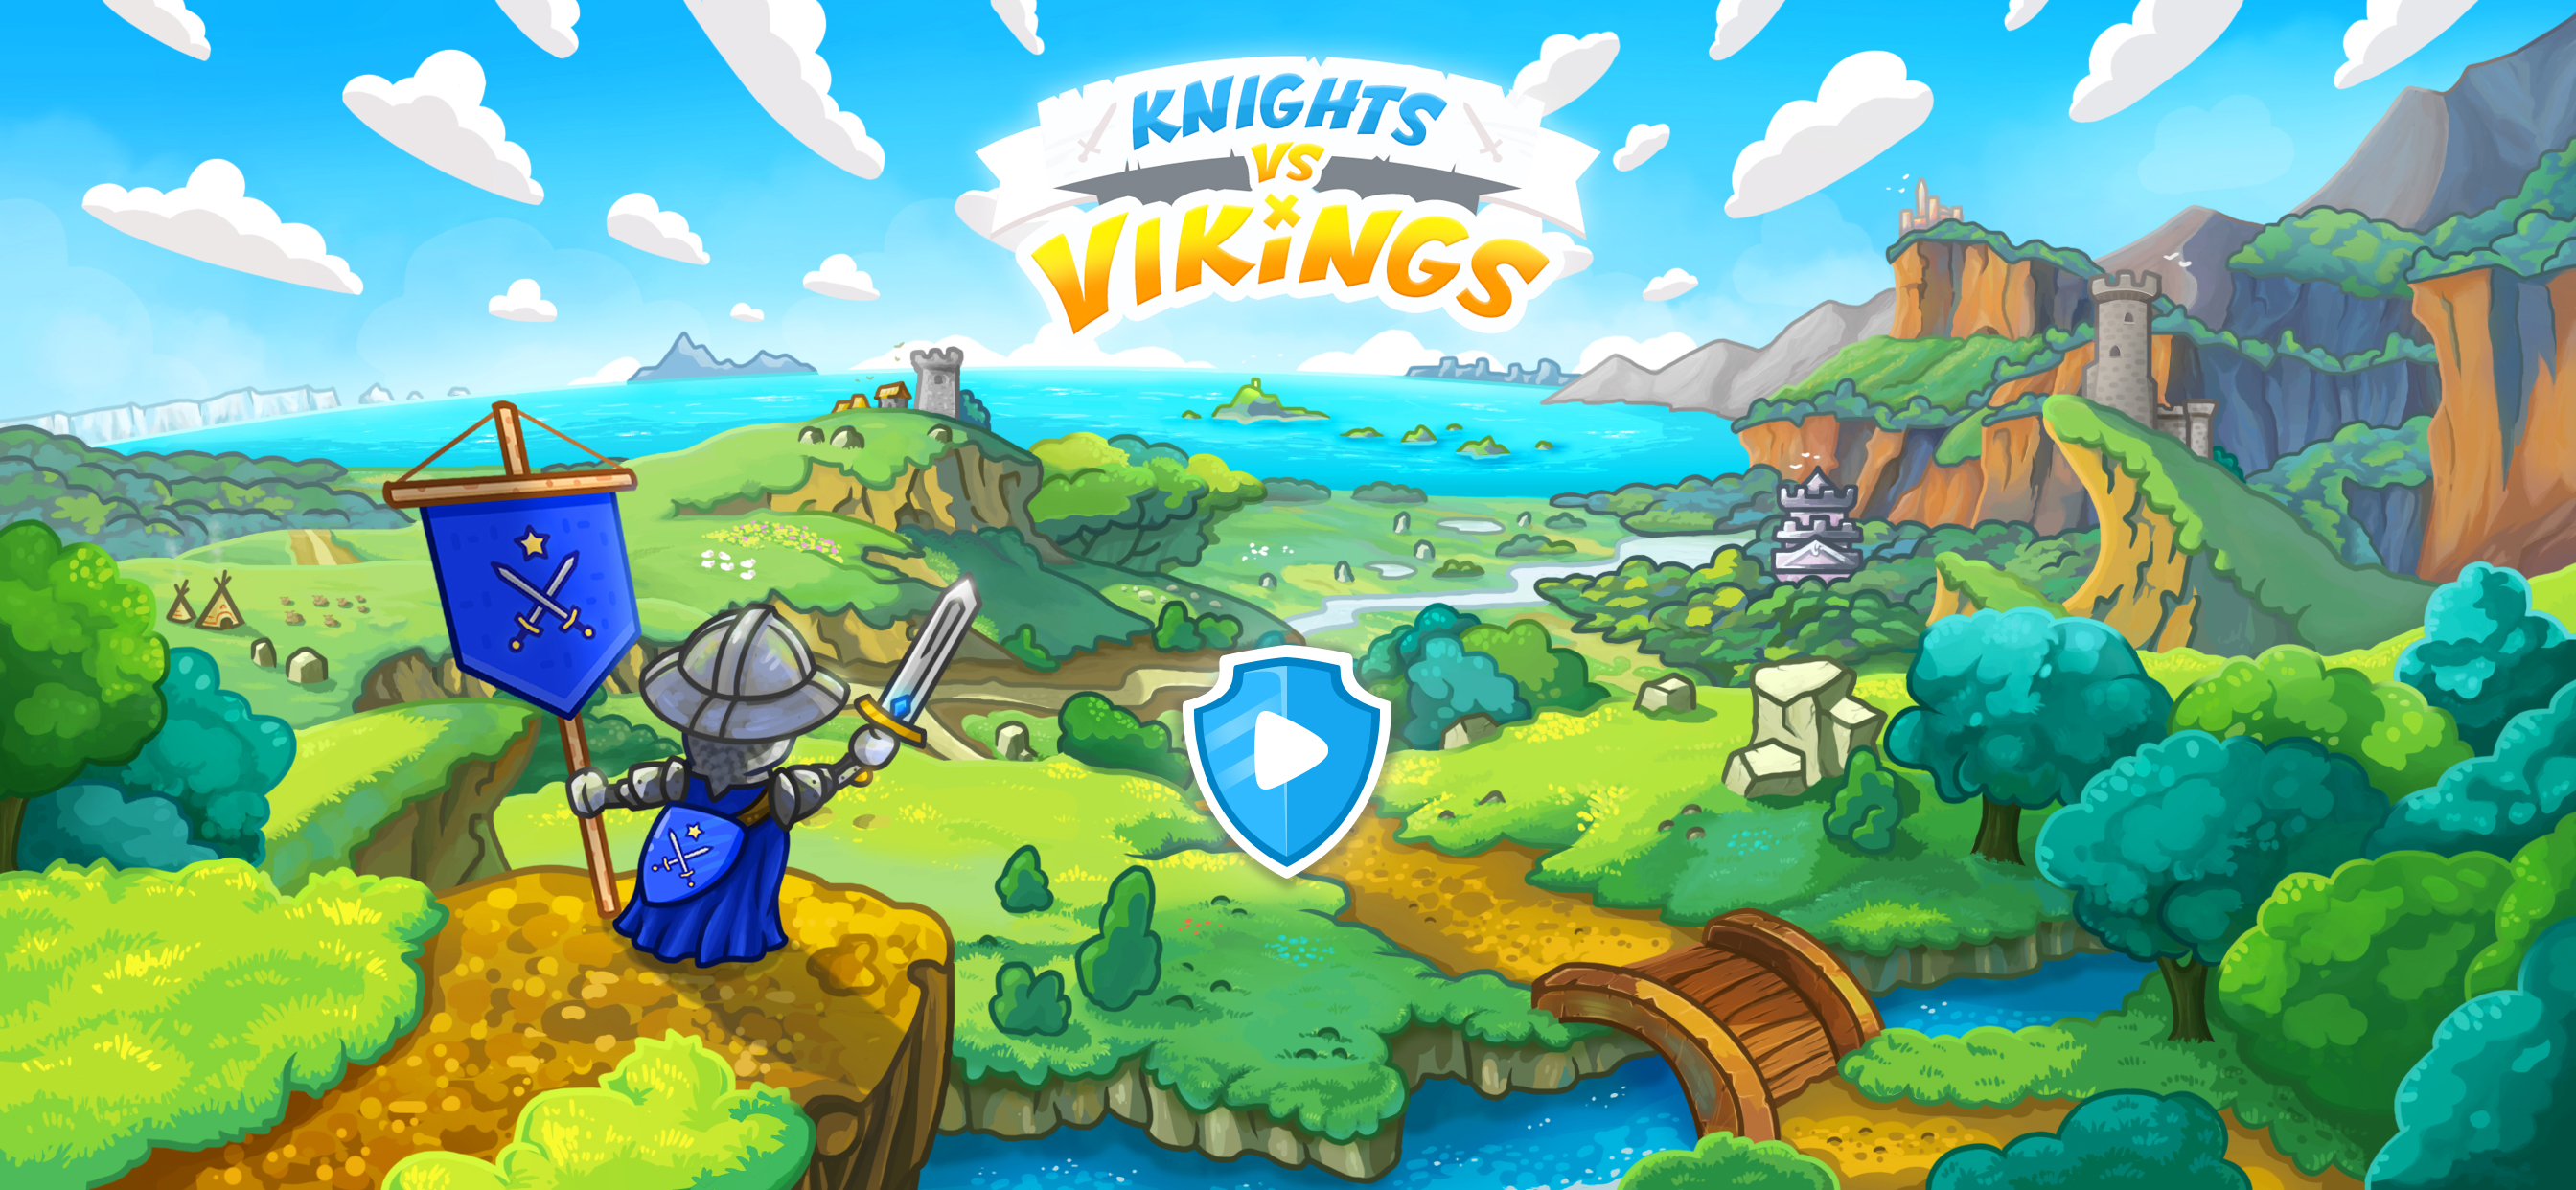 Knights vs Vikings